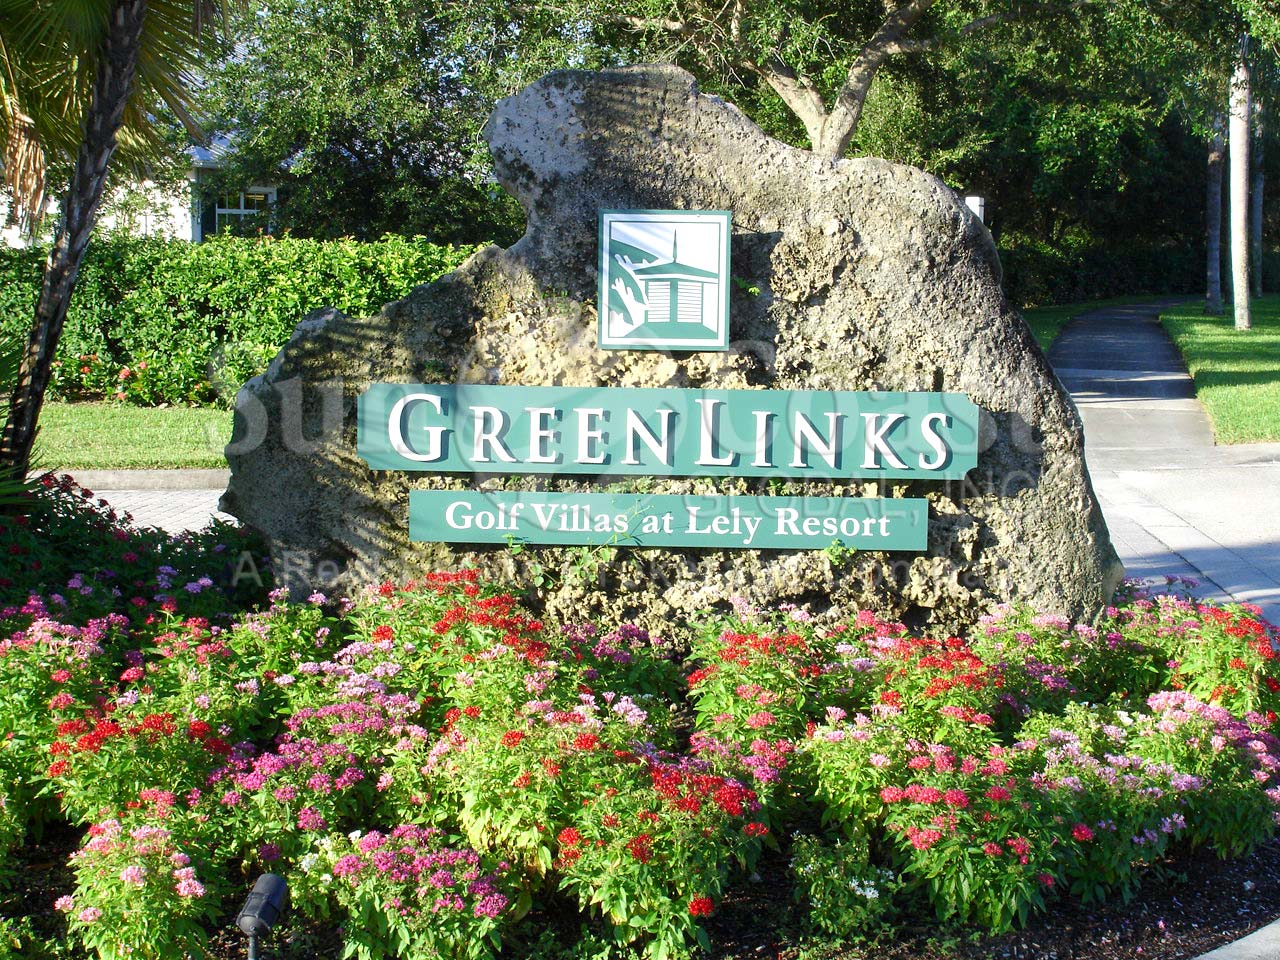 Greenlinks signage